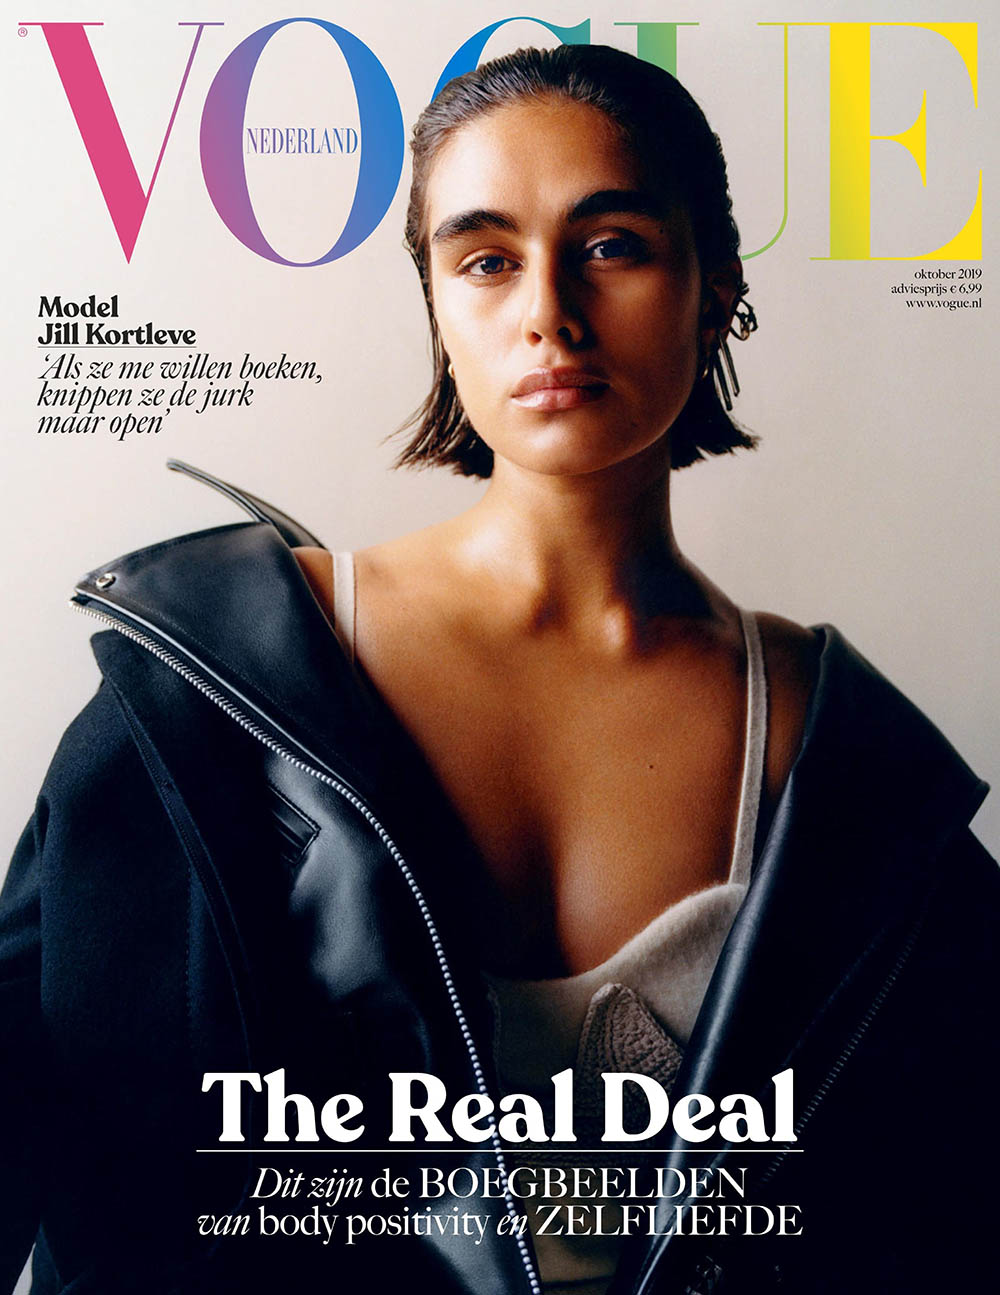 Jill Kortleve covers Vogue Netherlands October 2019 by Scott Trindle